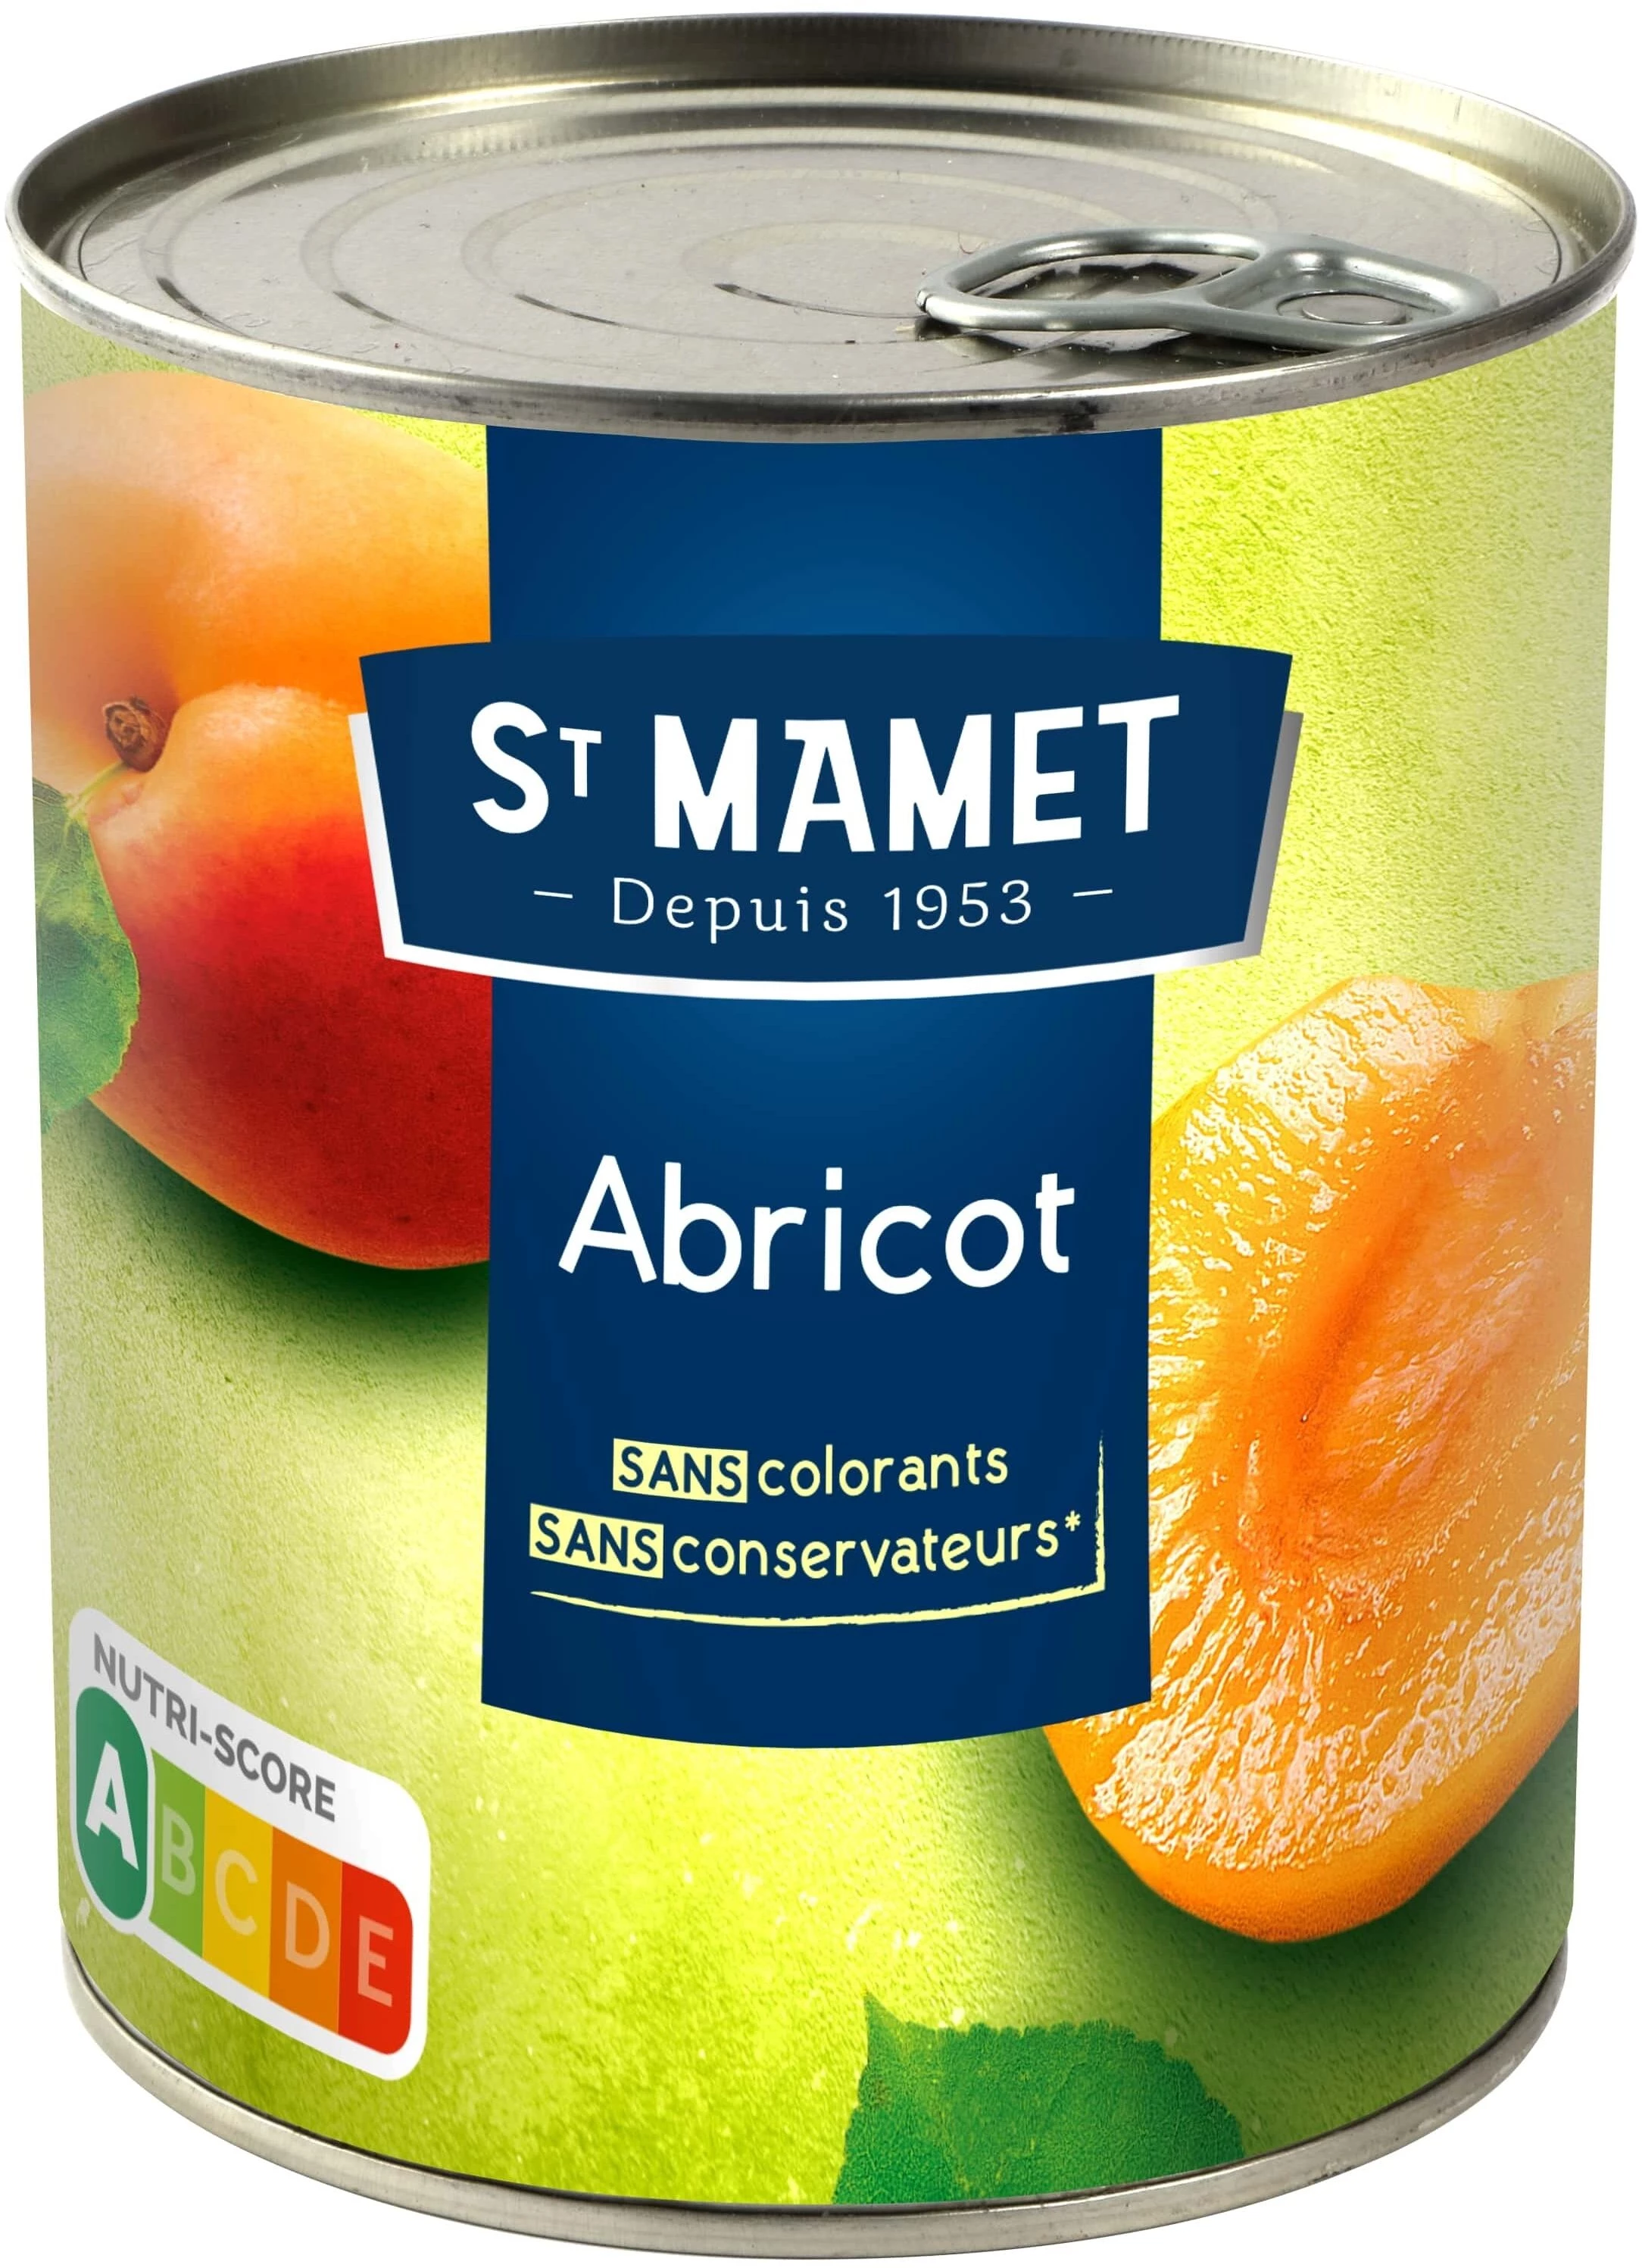 Fruits Au Sirop Abricots 480g Net égoutté - St Mamet